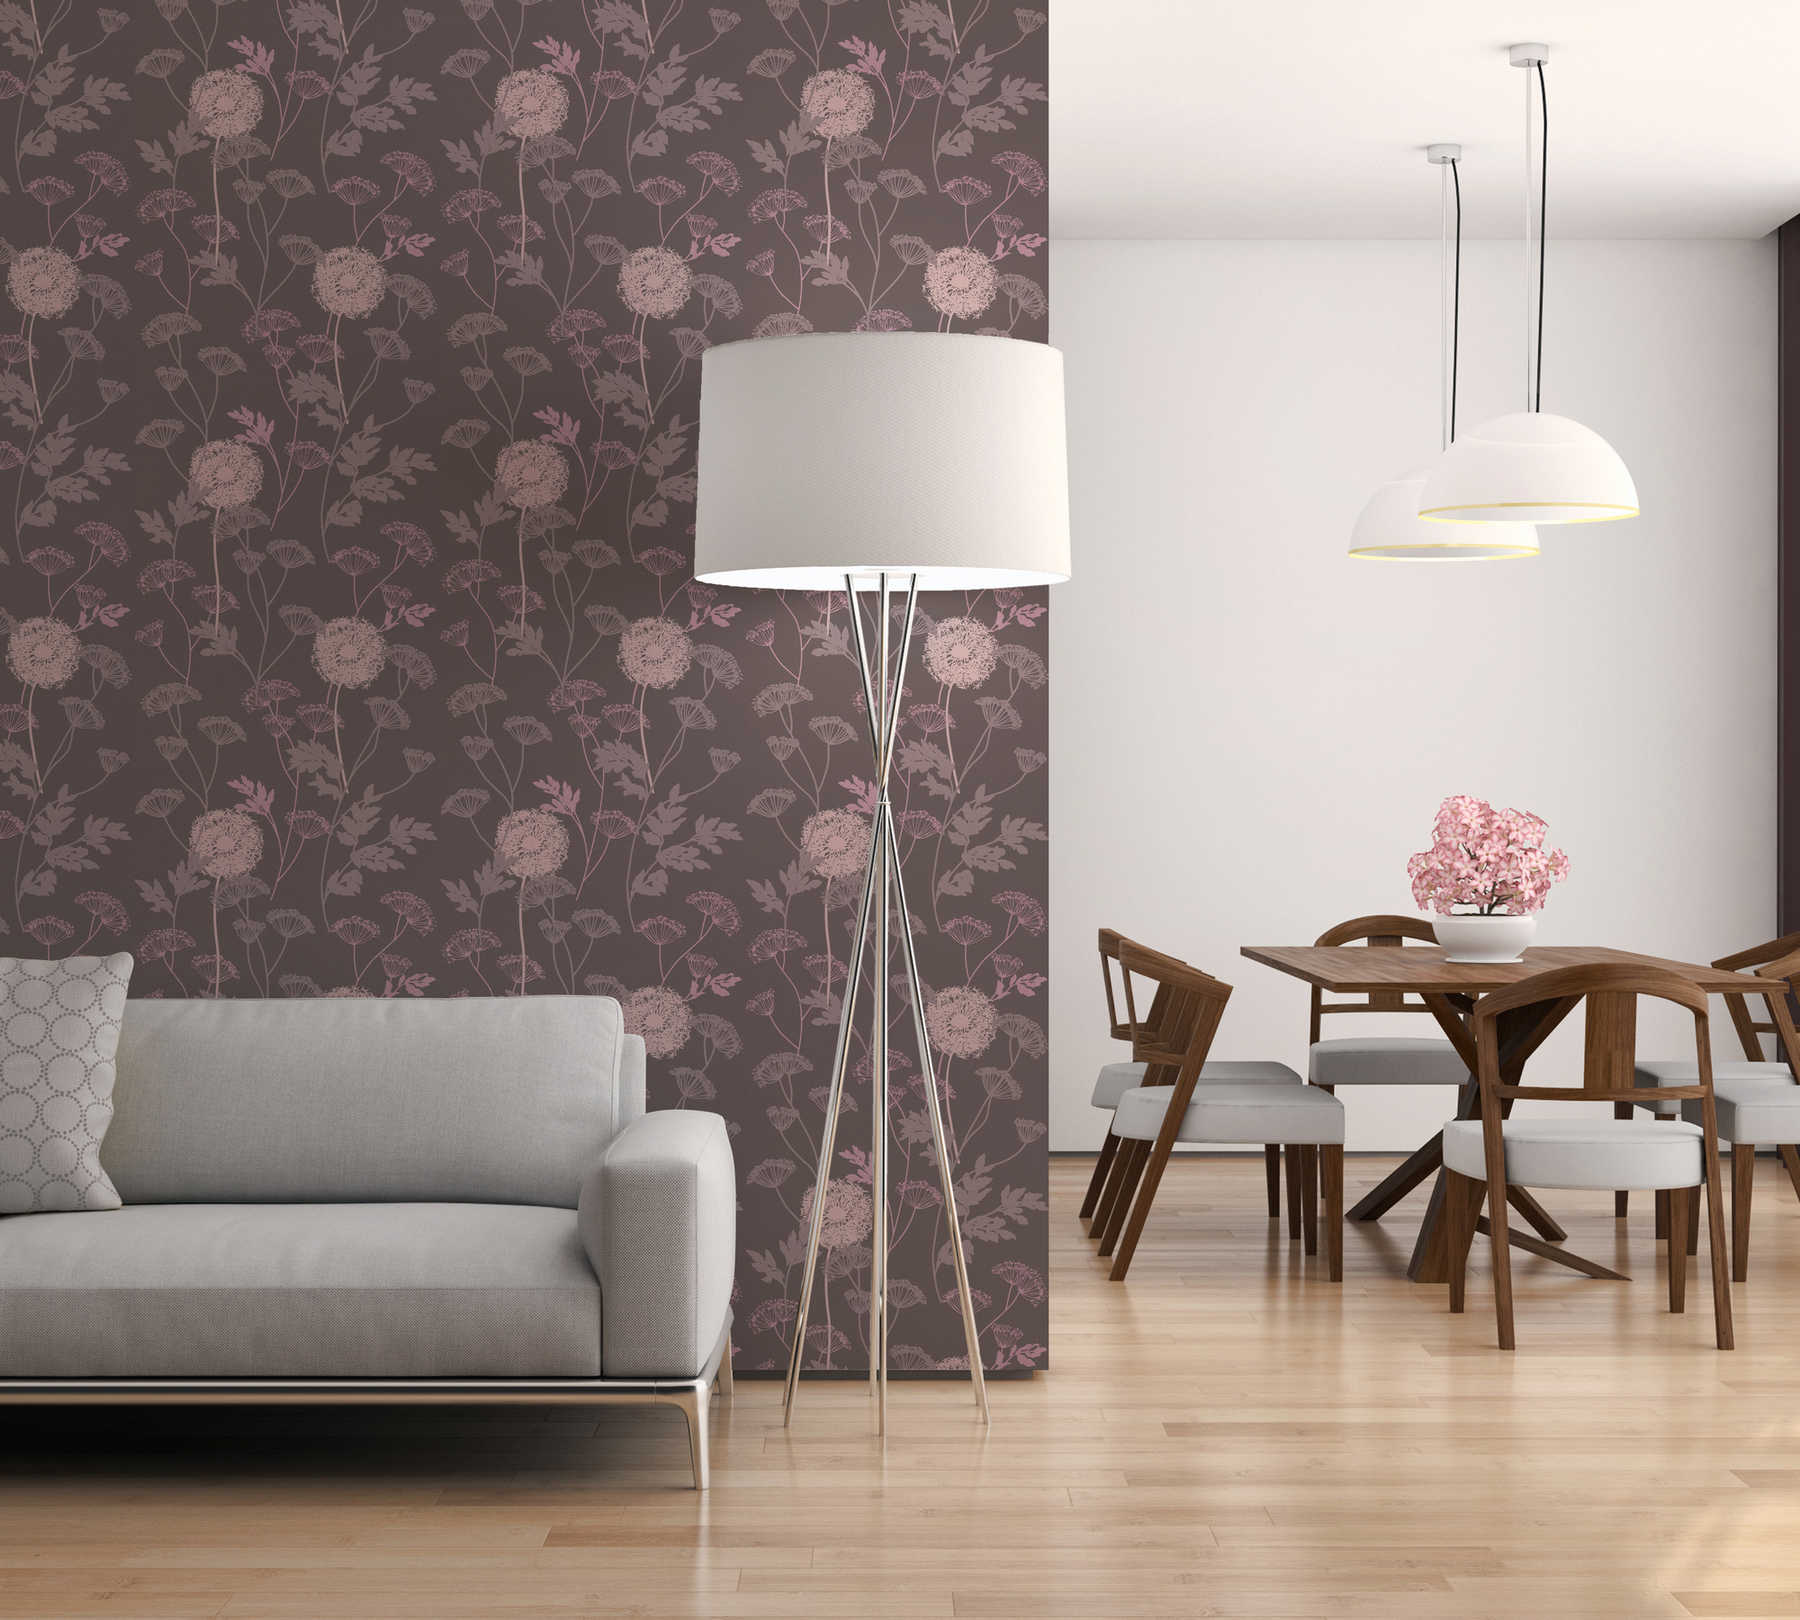             Papel pintado texturizado con motivos florales en colores cálidos - marrón, rosa, beige
        